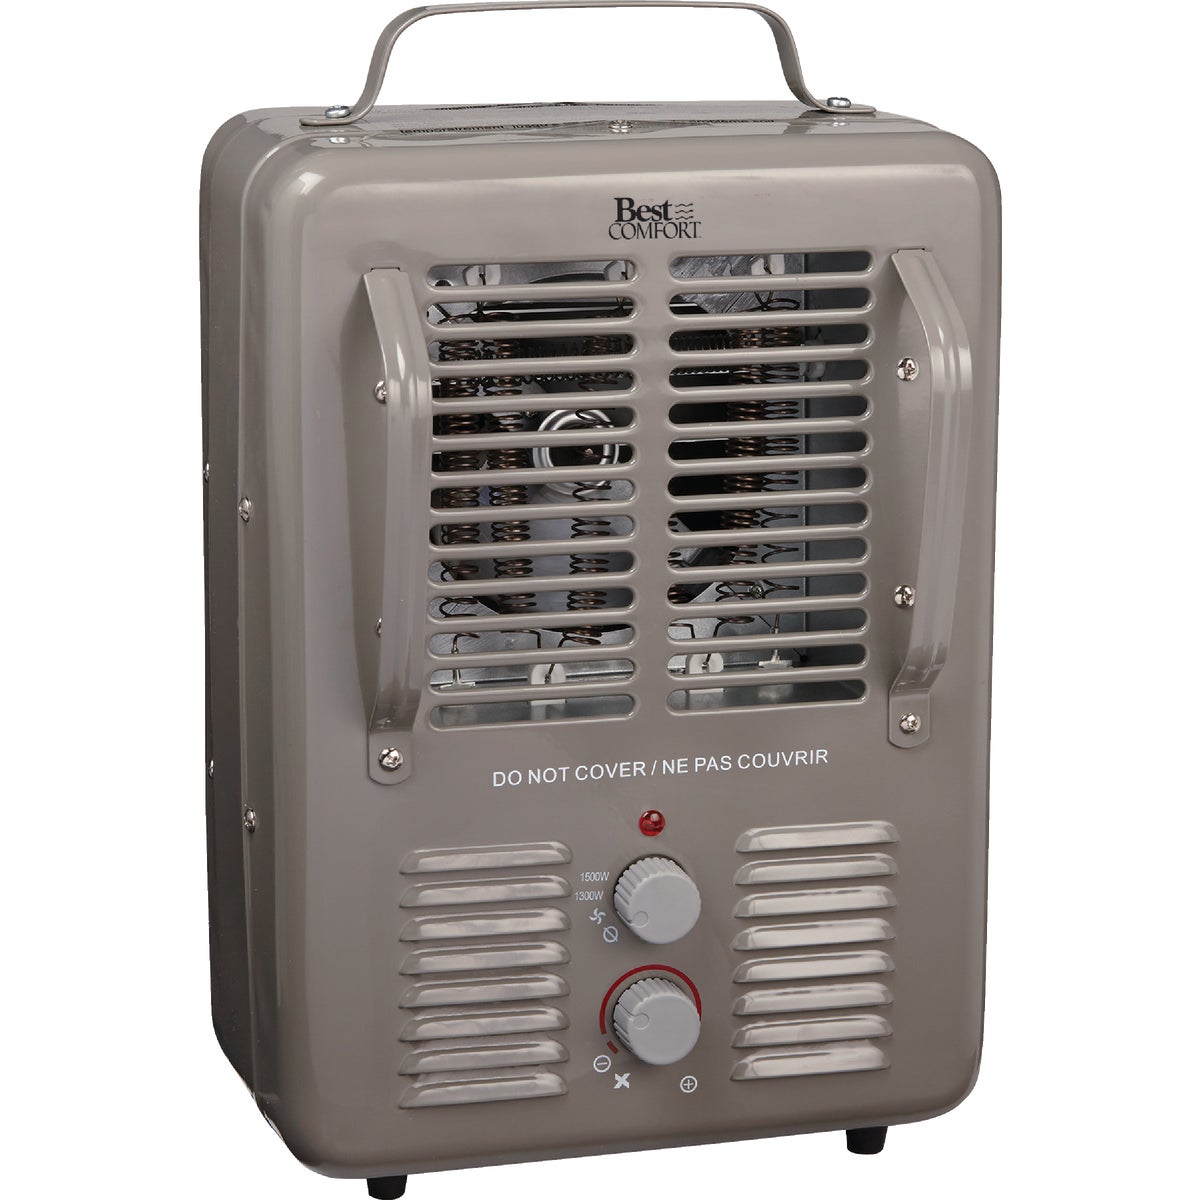 Best Comfort 1500-Watt 120-Volt Milkhouse Heater